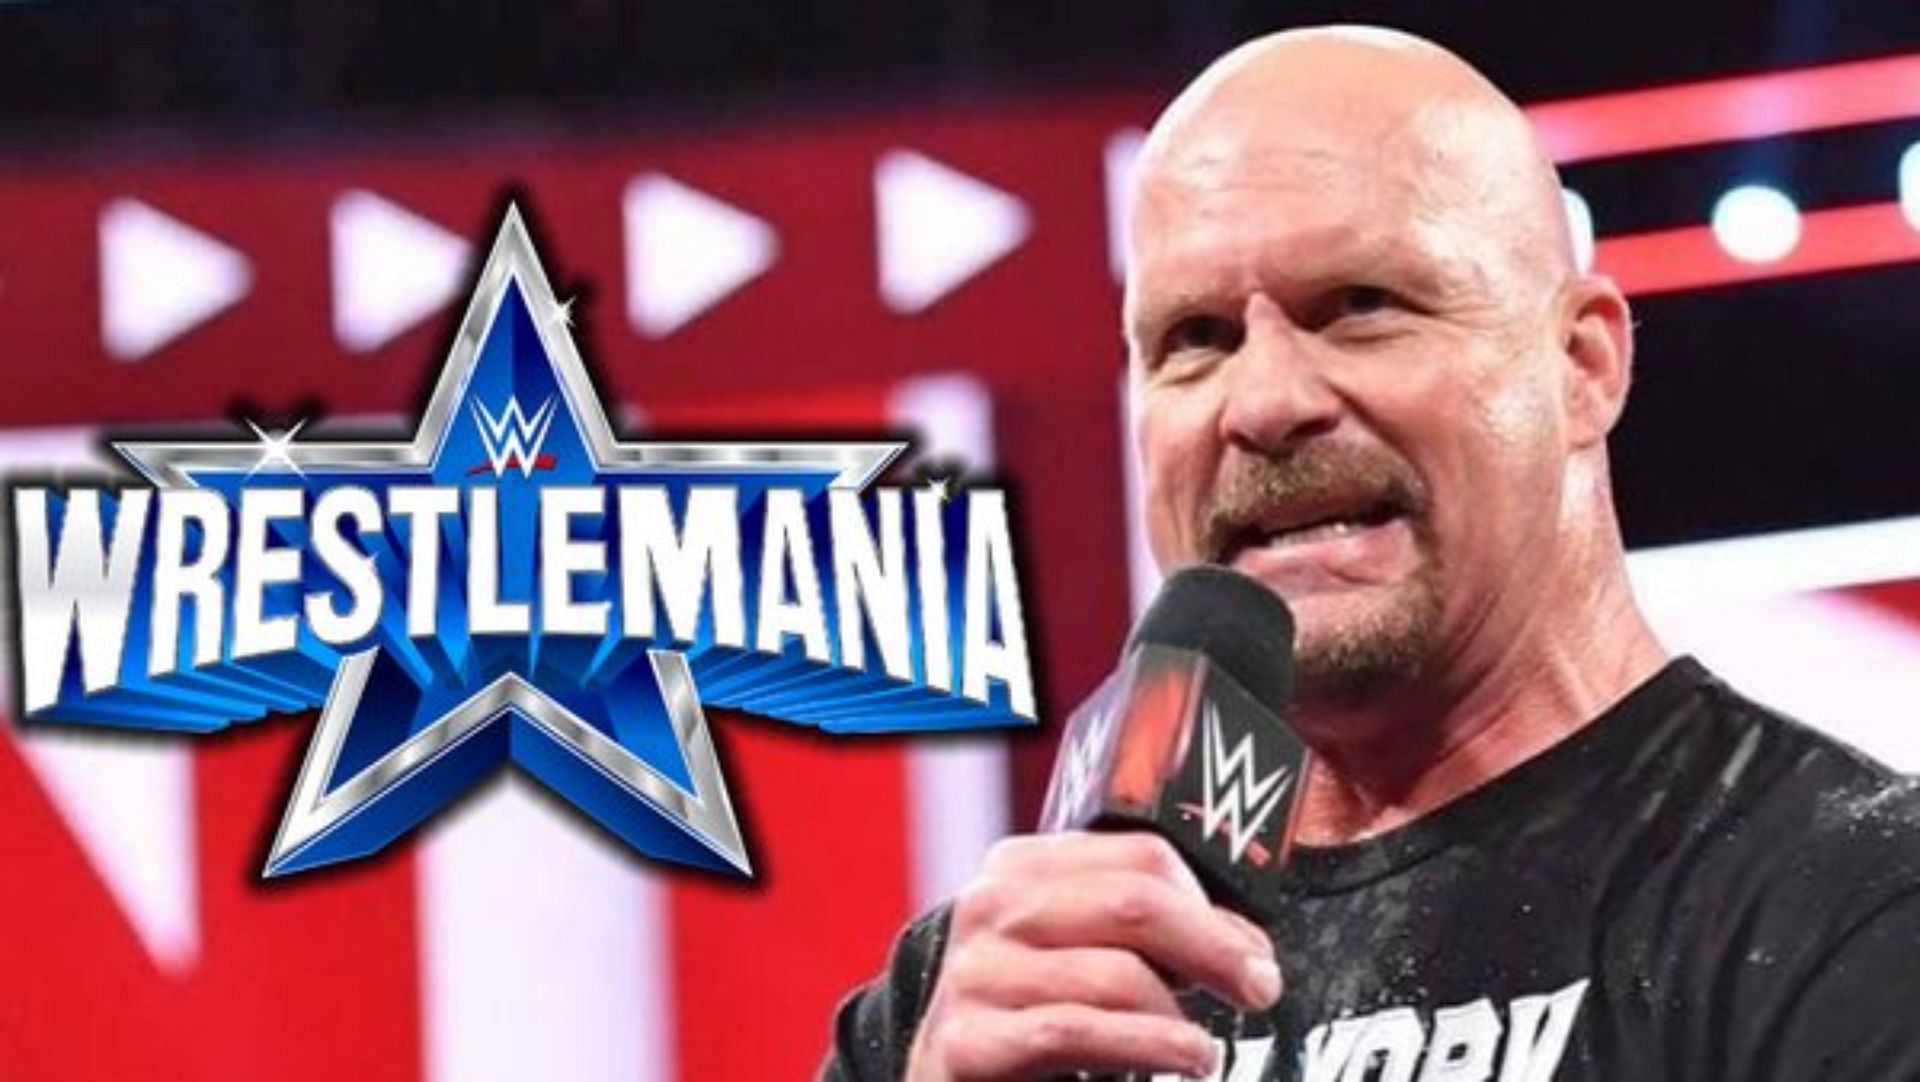 Stone Cold Steve Austin will make his WWE return at WrestleMania.